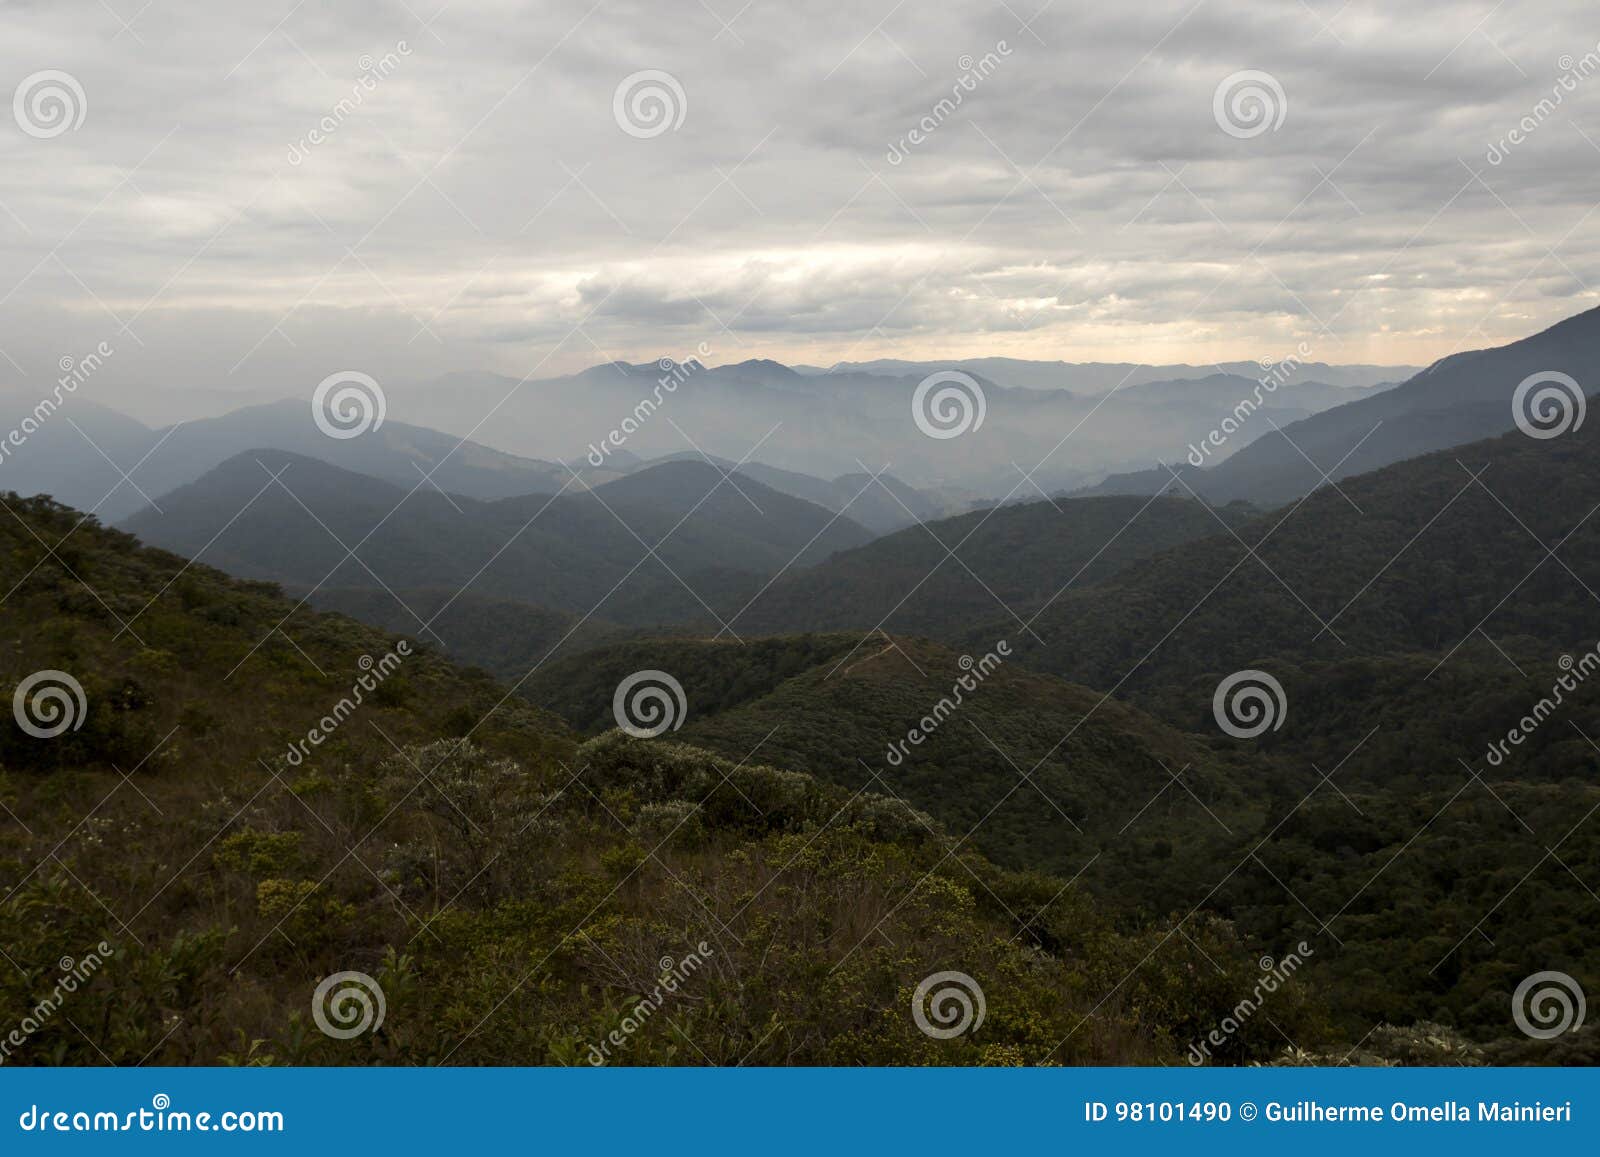 serra fina mountain range with clouds in the winter of minas gerais brazil horizontal